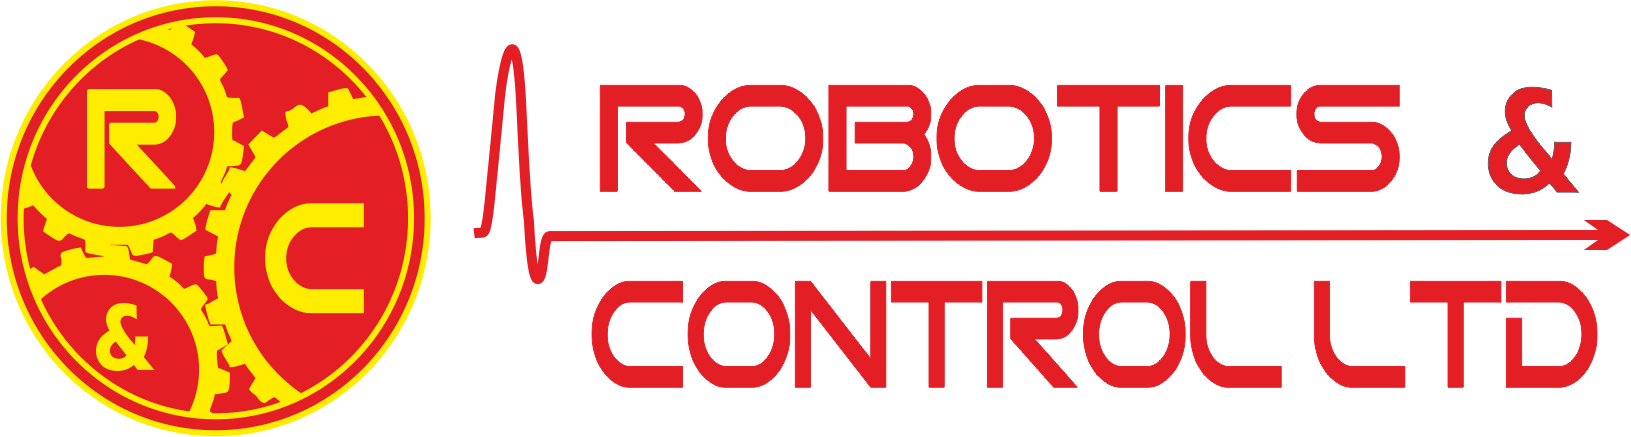 R&C-logo